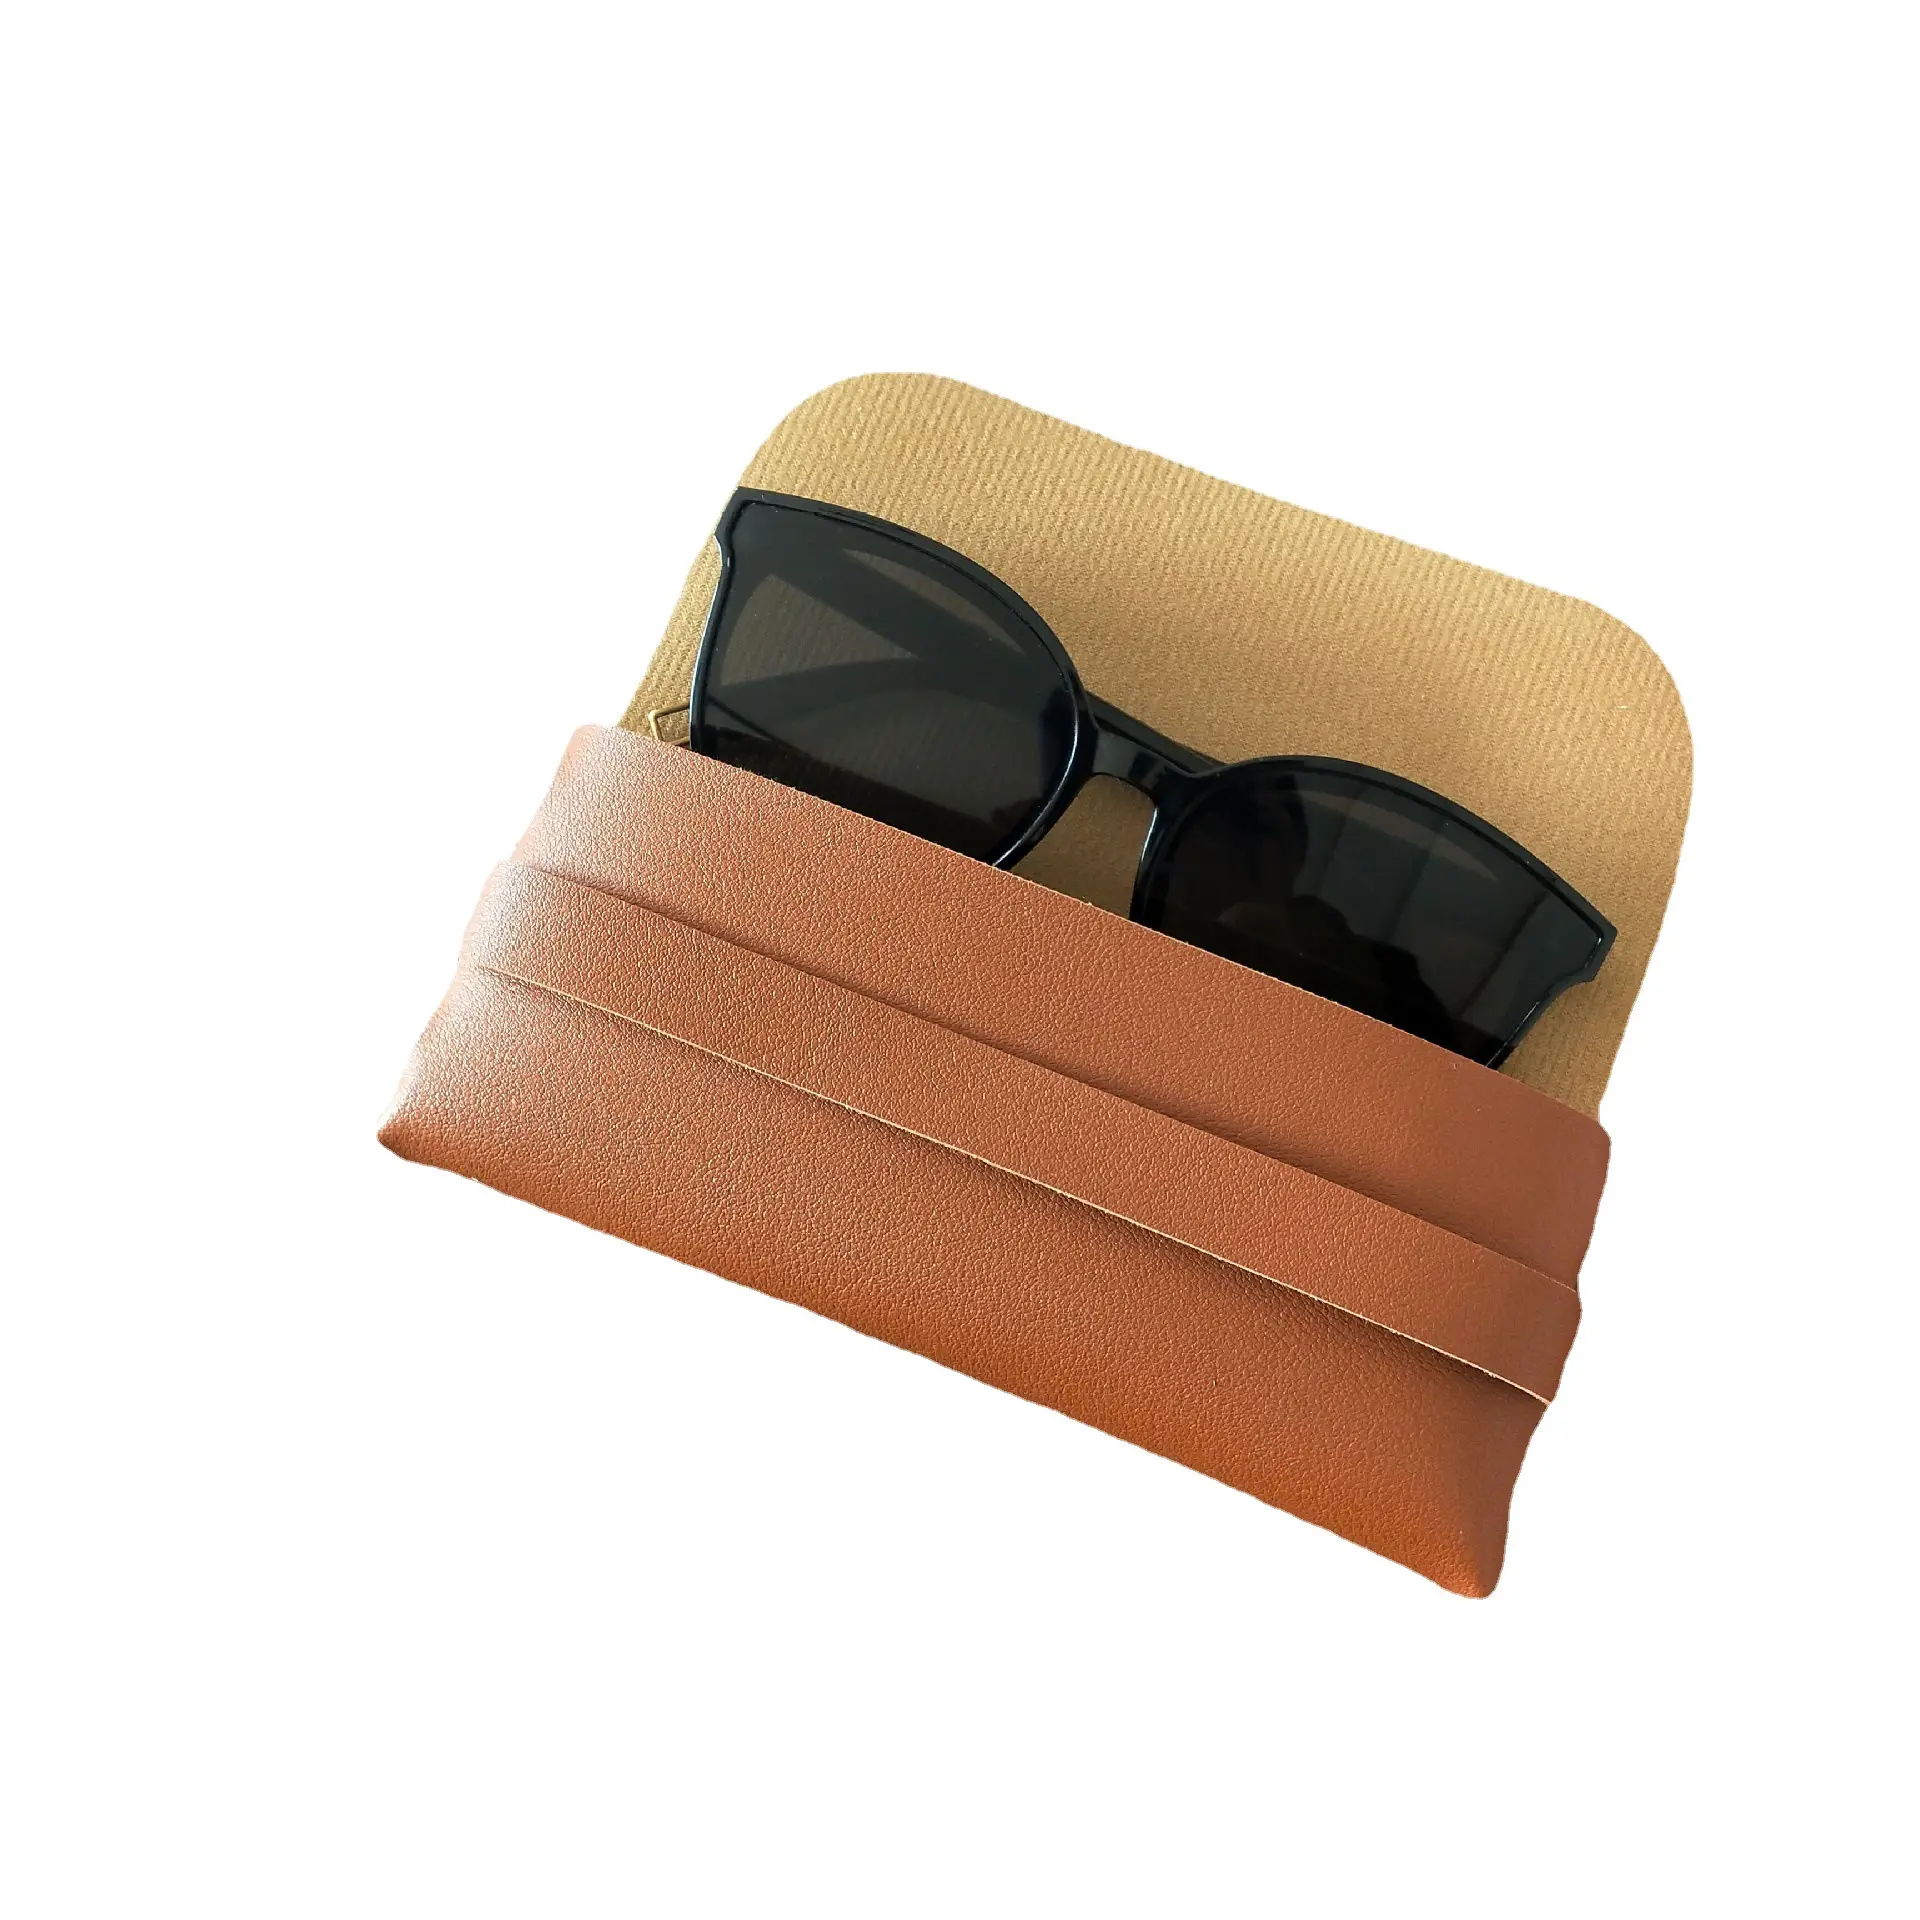 Fashion Mens Sunglasses Polarized Wholesale With Handmade Sunglasses Case And Microfiber Cloth Kit glasses